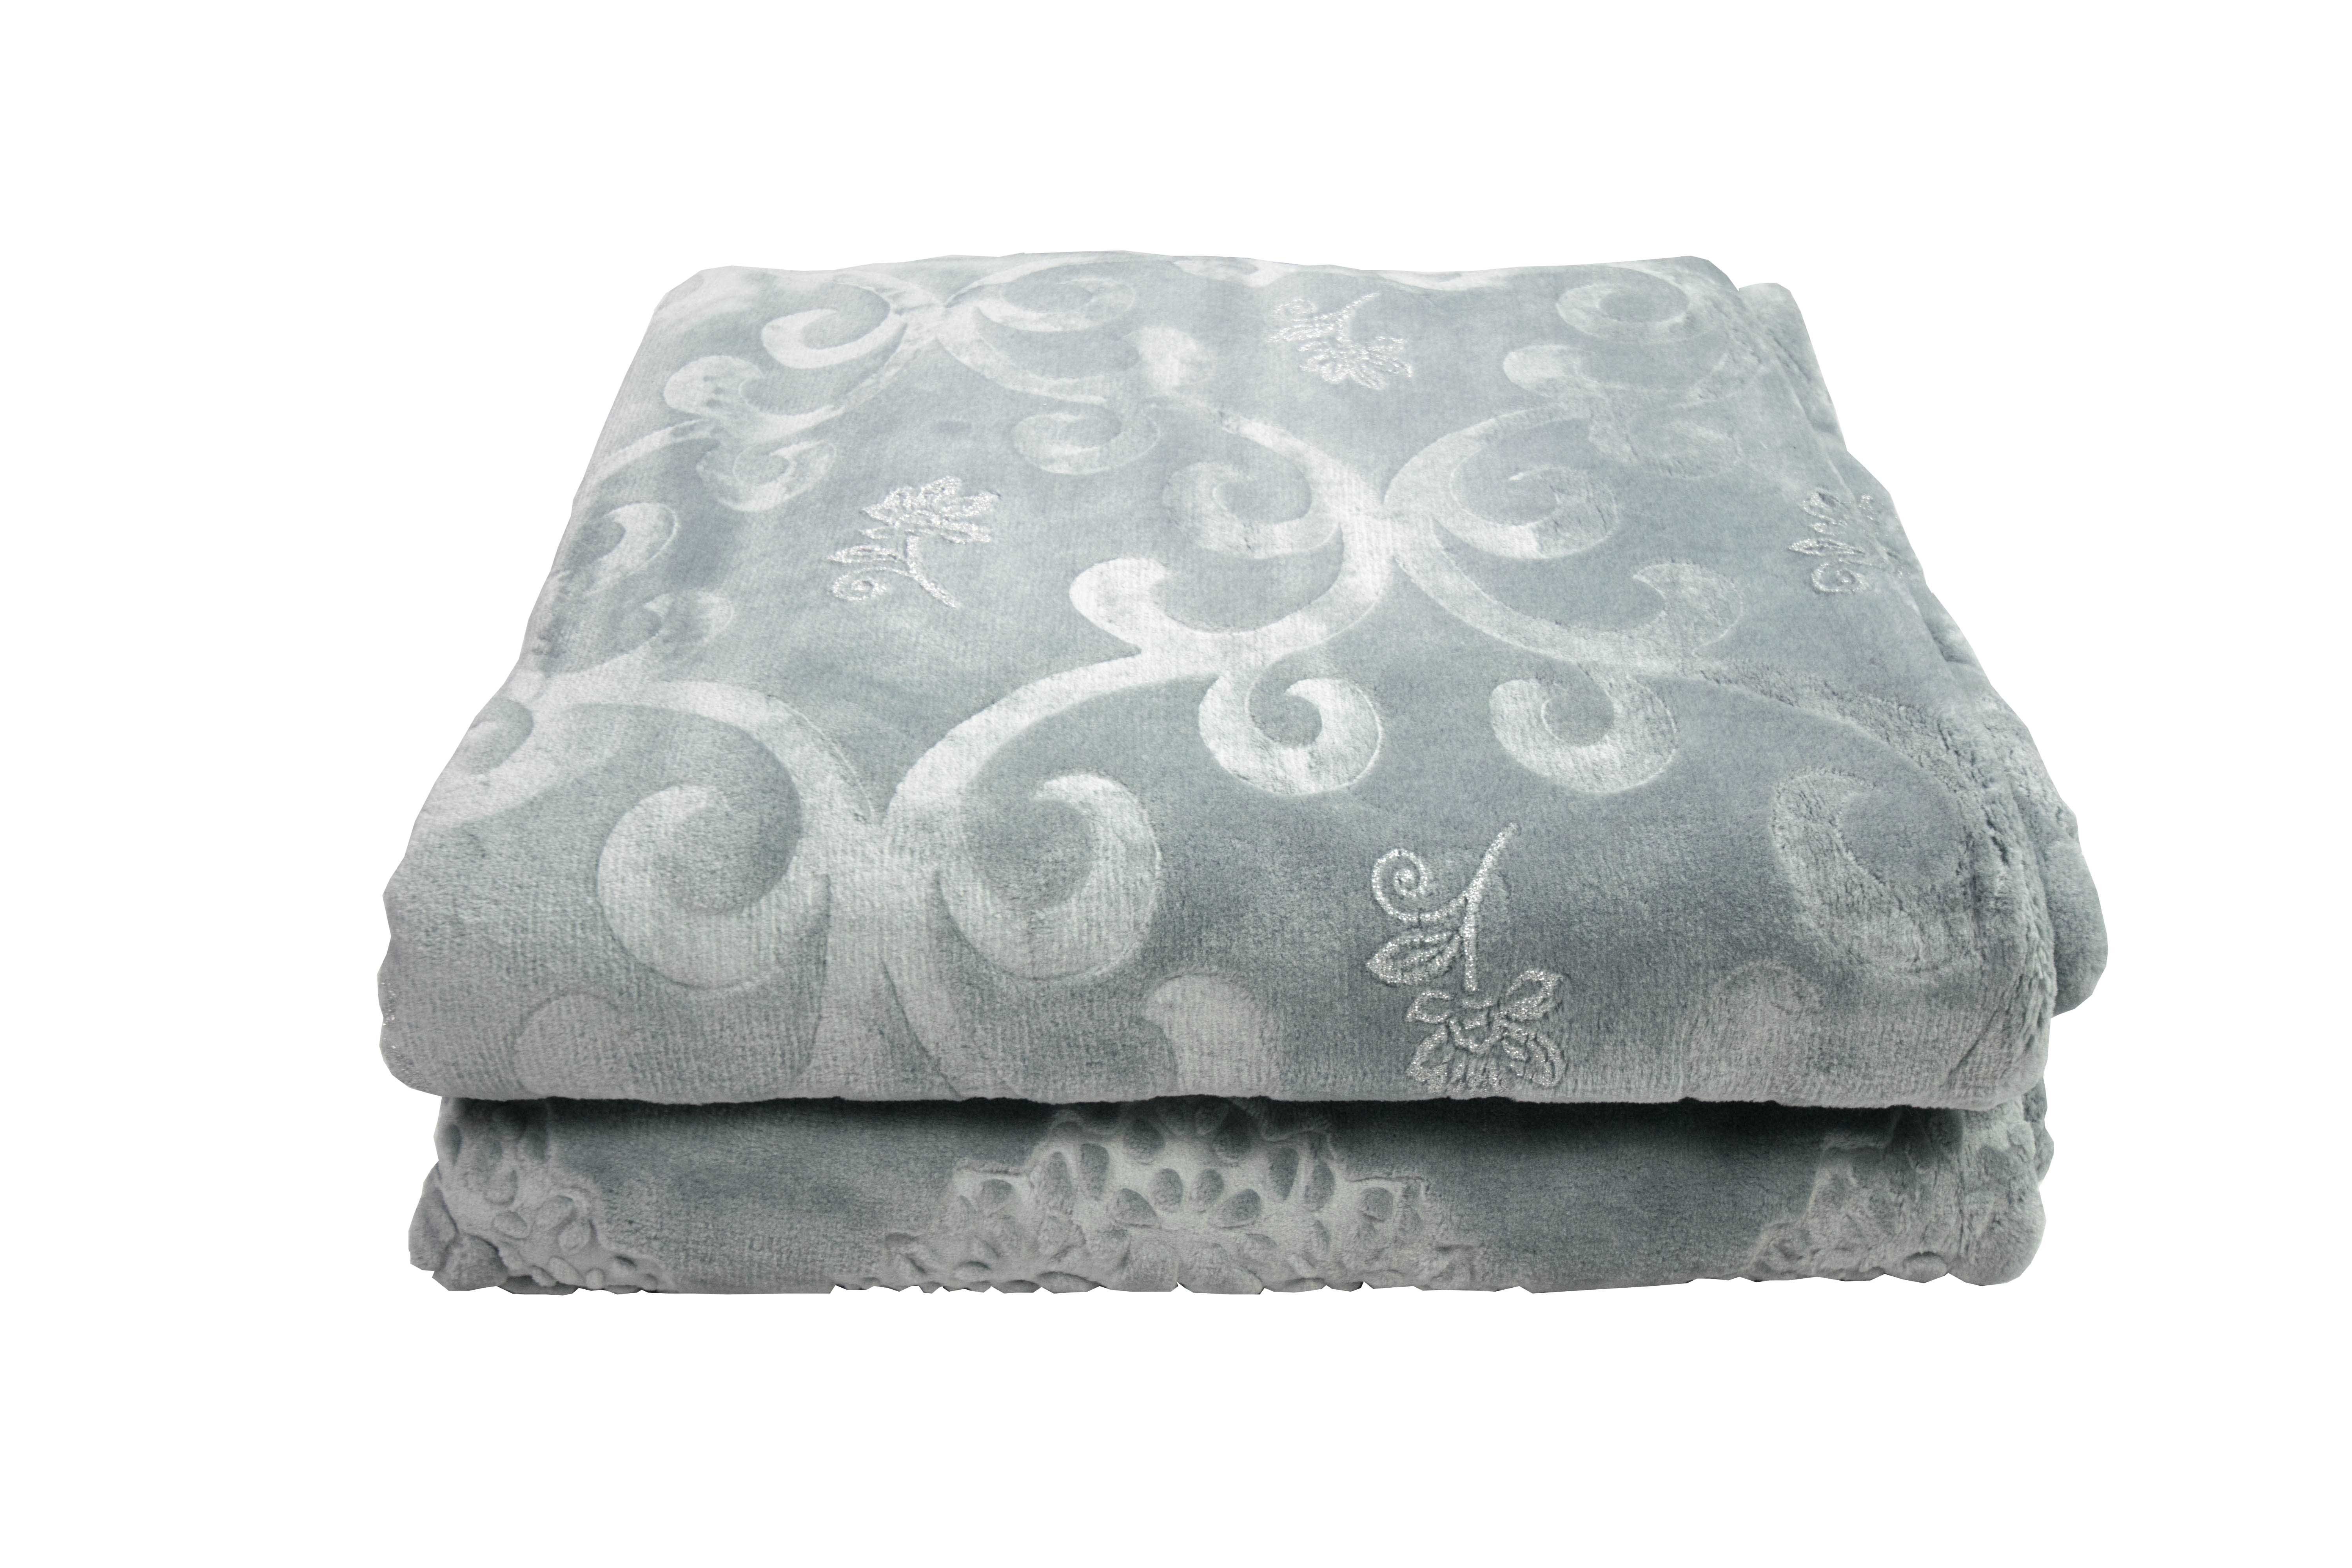 Tagesdecke Tagesdecke Decke mit Ornamenten in grau silber, TeppichHome24